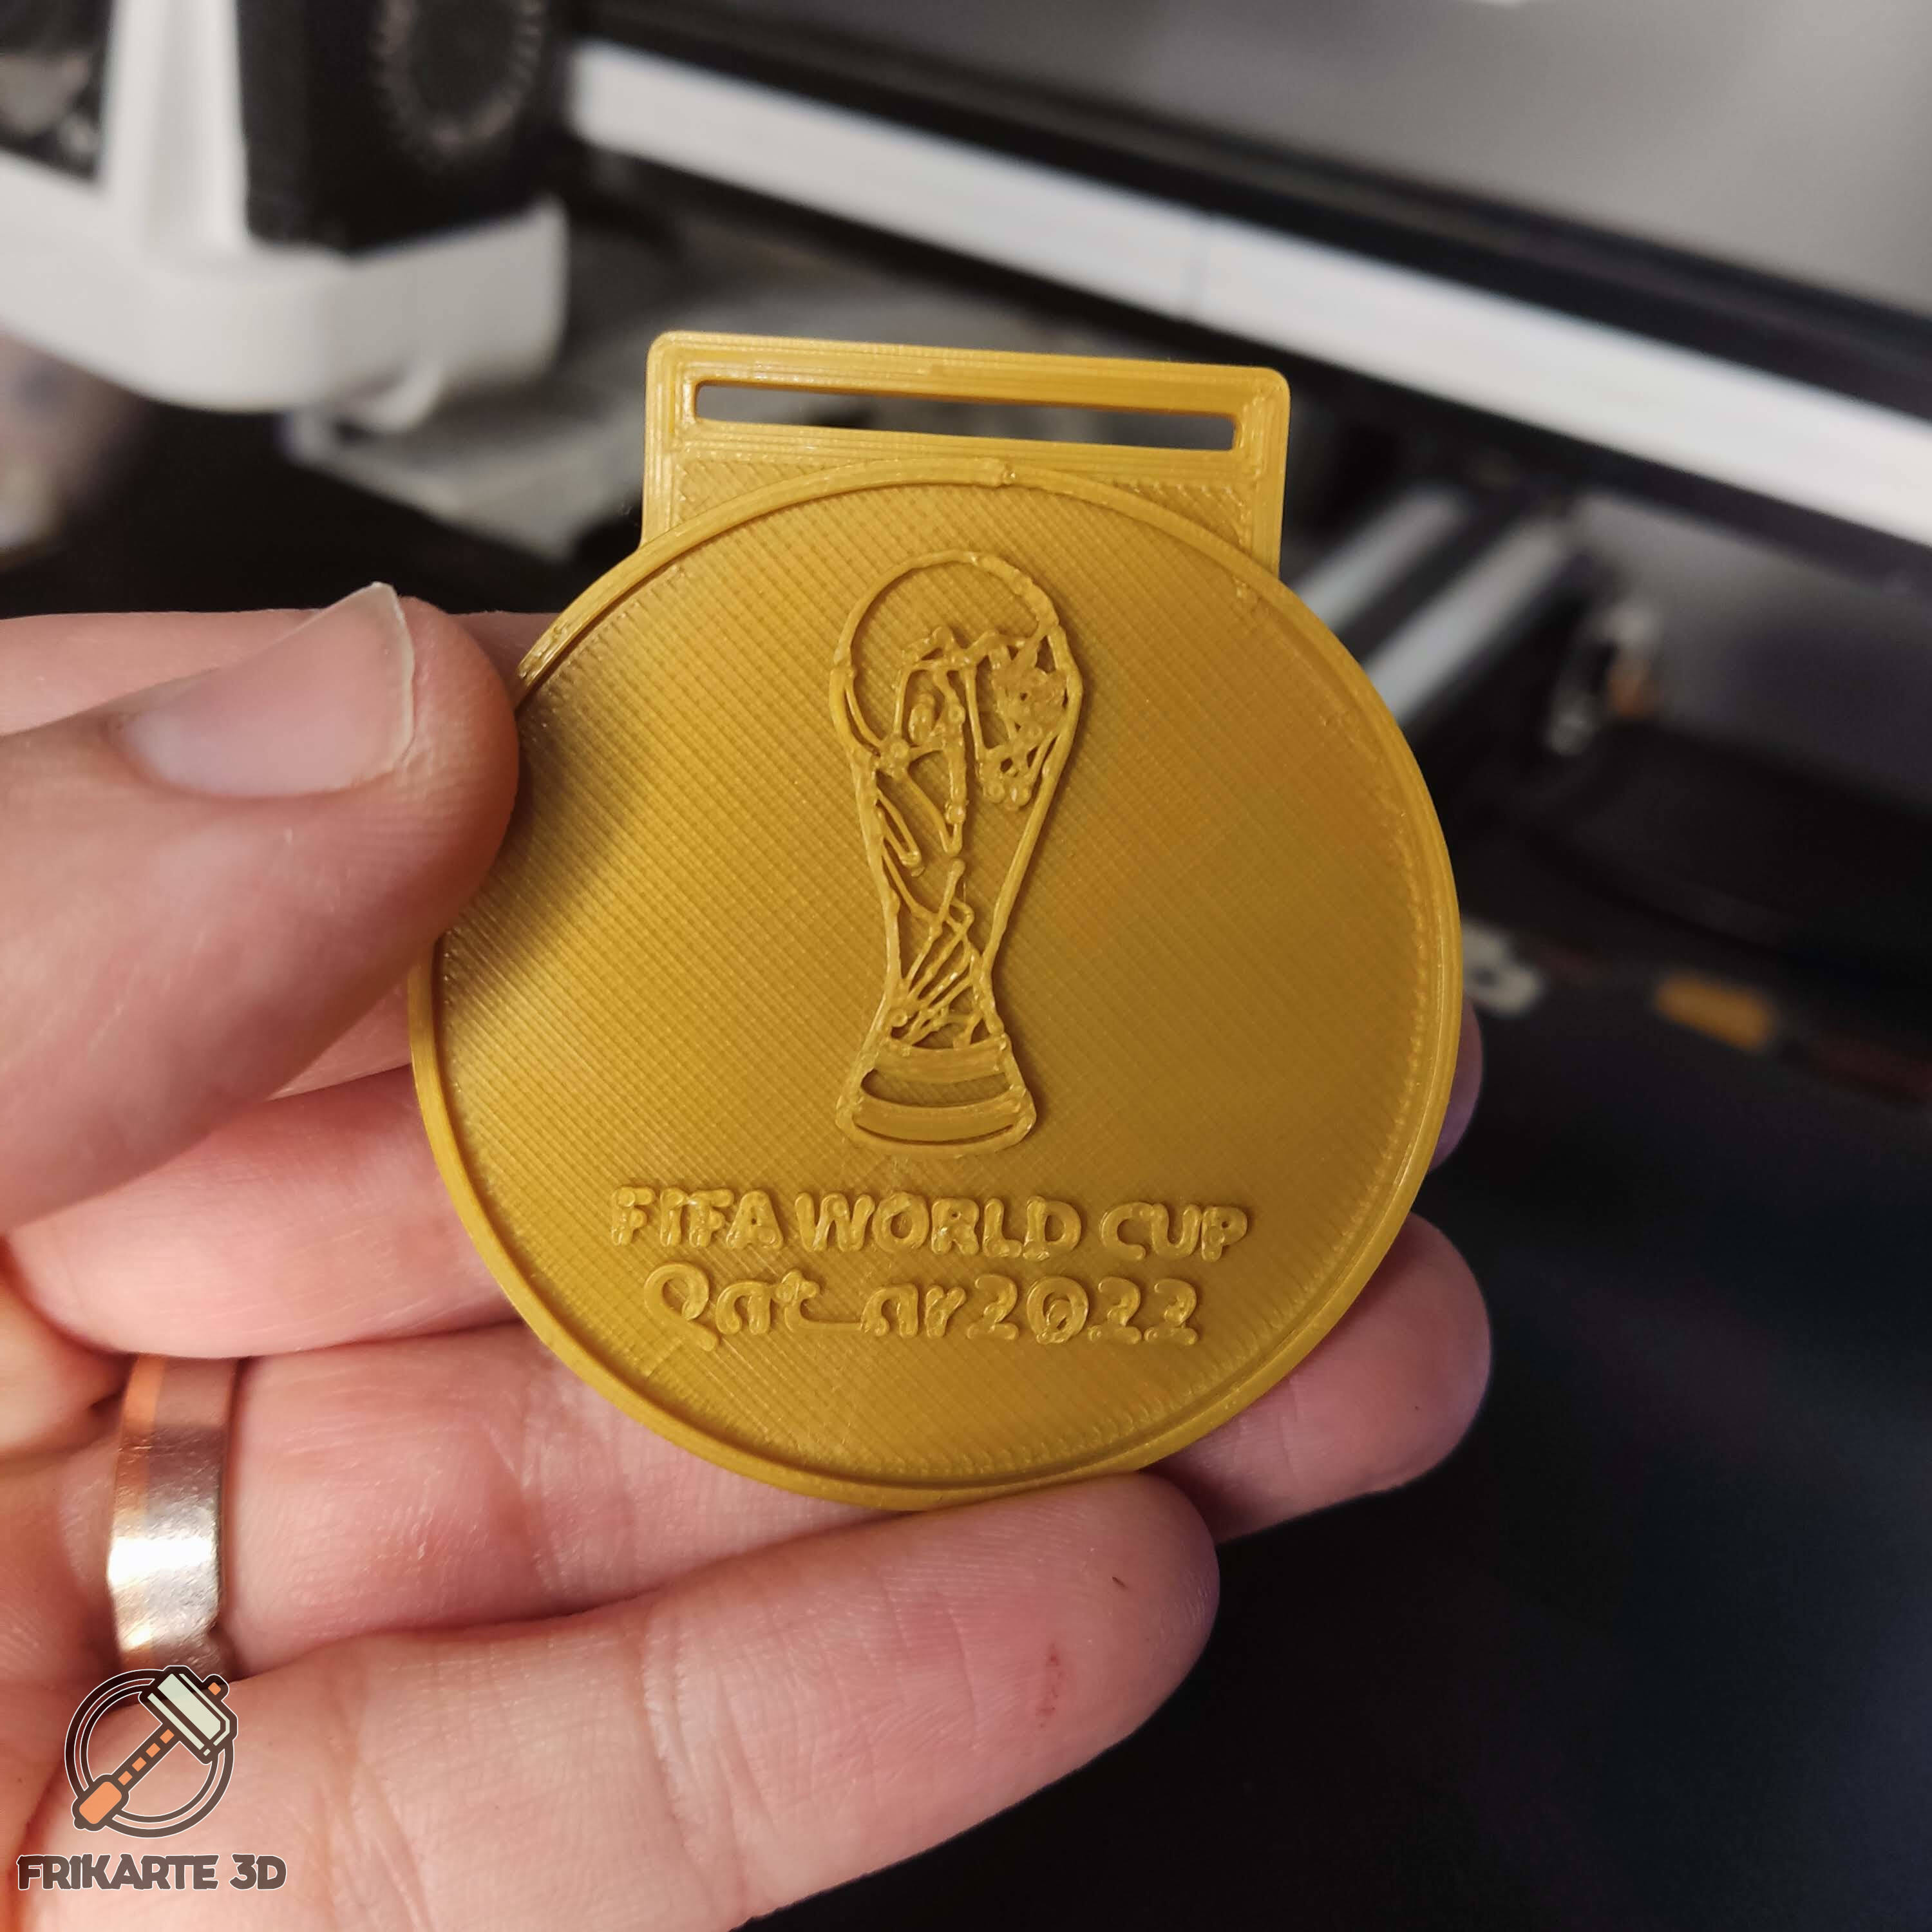 FIFA WORLD CUP Qatar 2022 Medal 🥇⚽